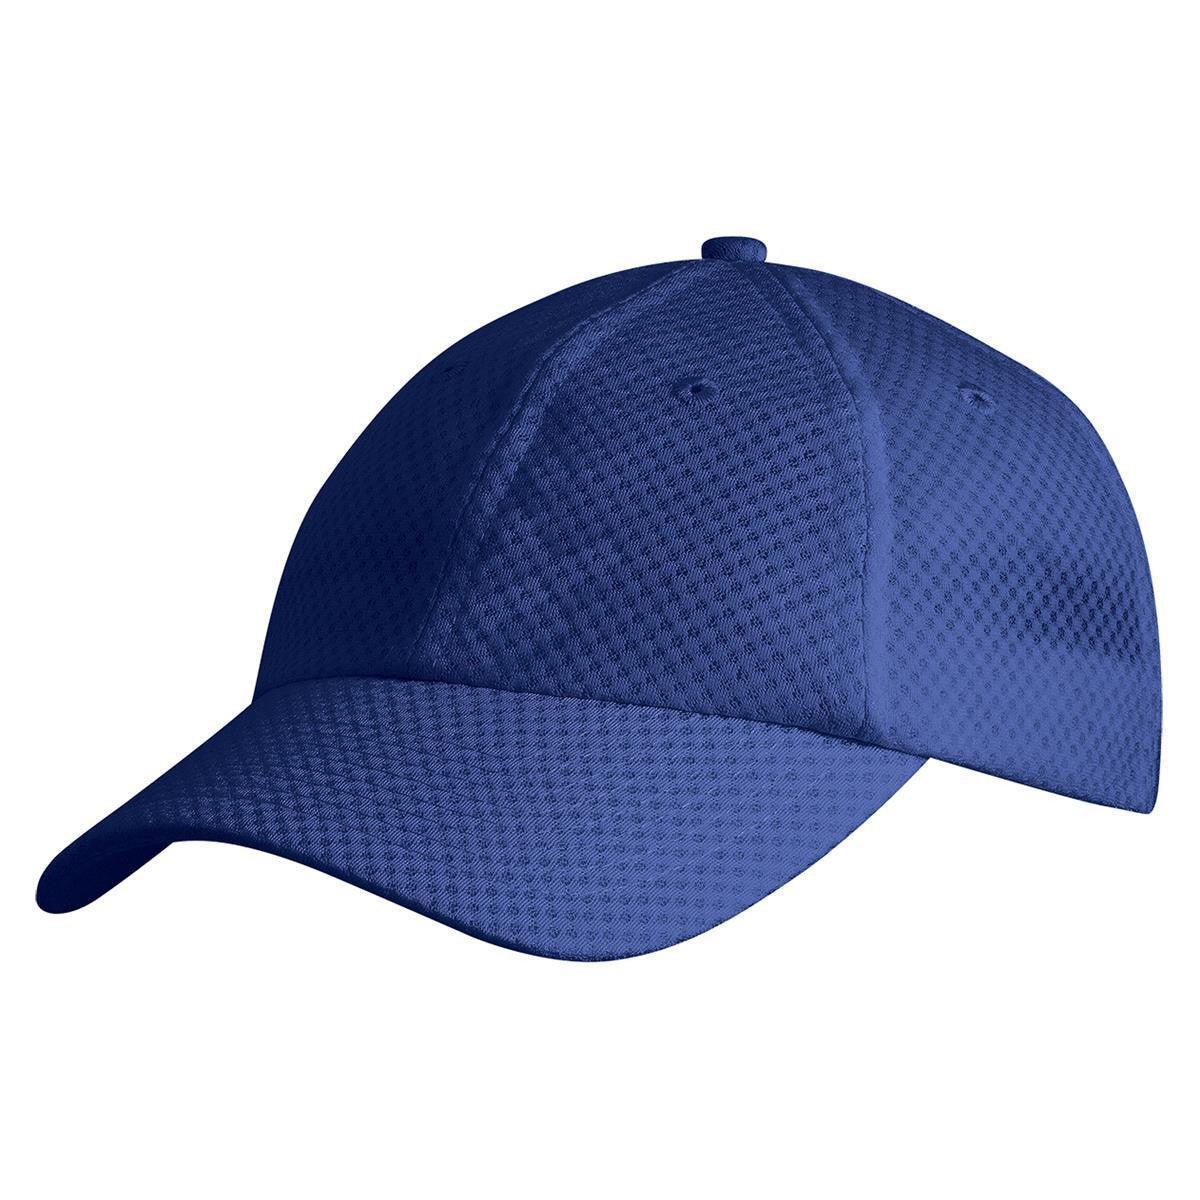 Mesh Sports Cap (Breathable) - Nordic Sport Australia Pty Ltd